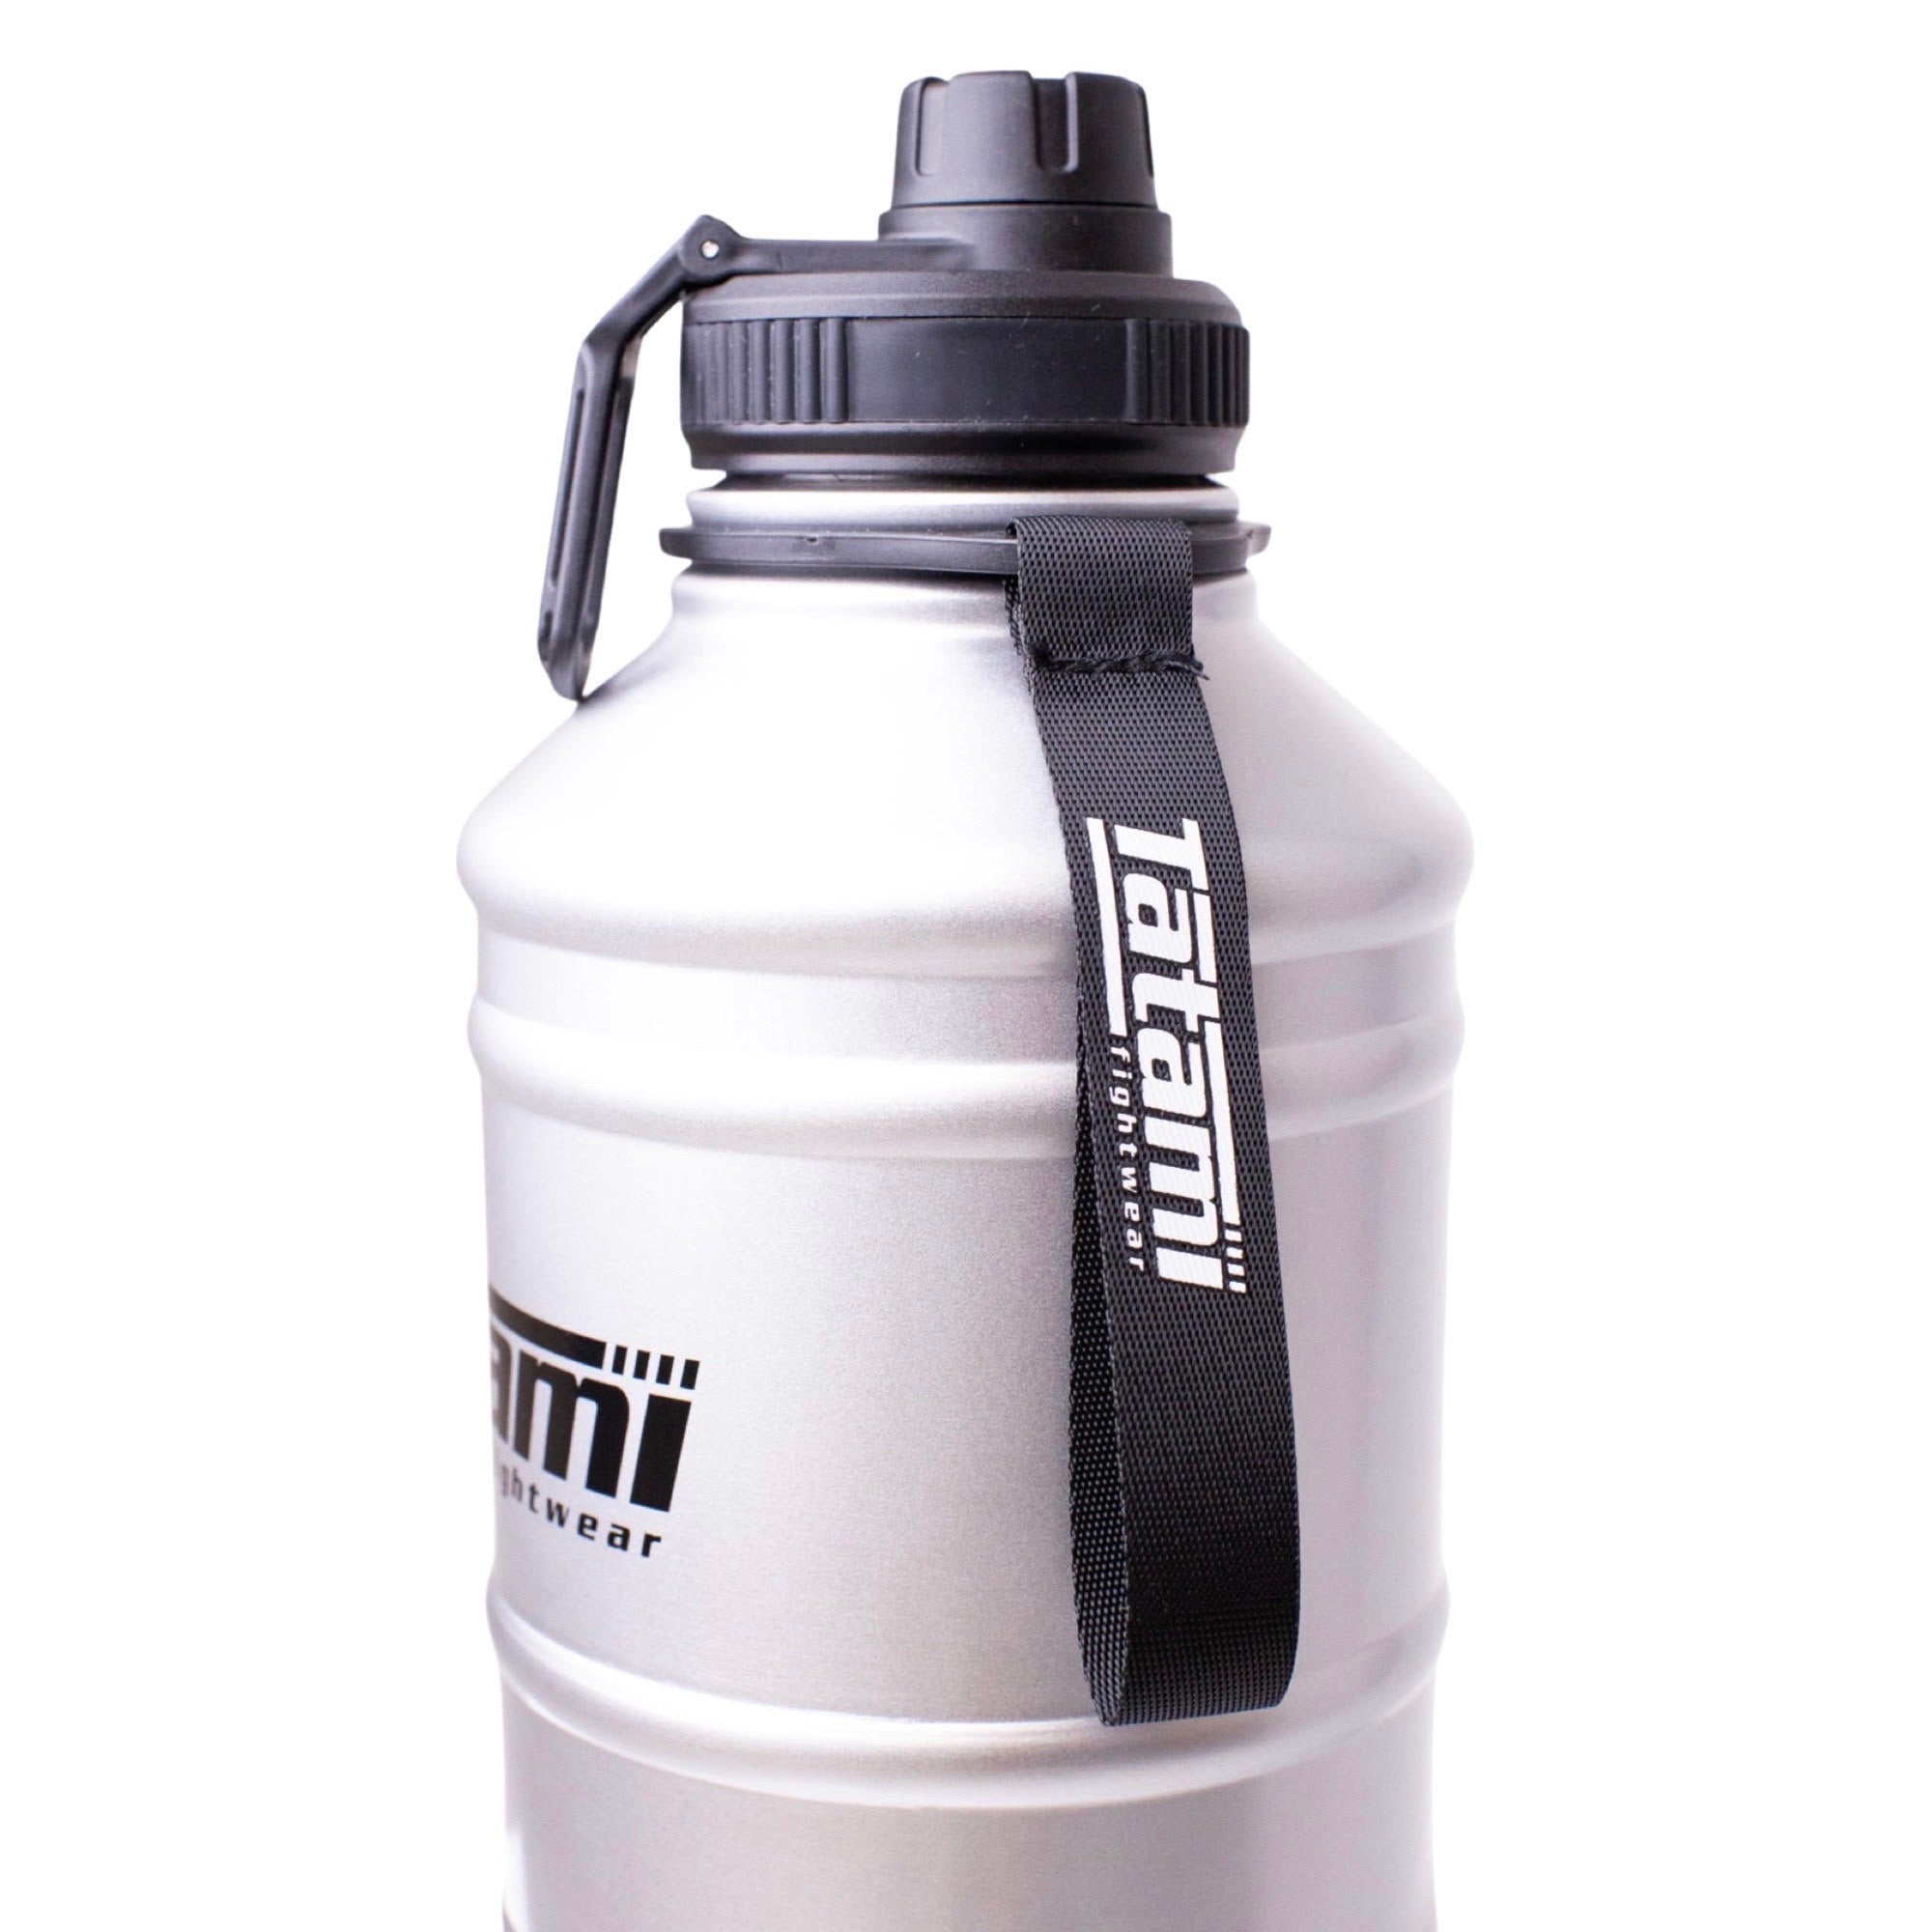 TATAMI Metal 2.2L Water Bottle - Grey